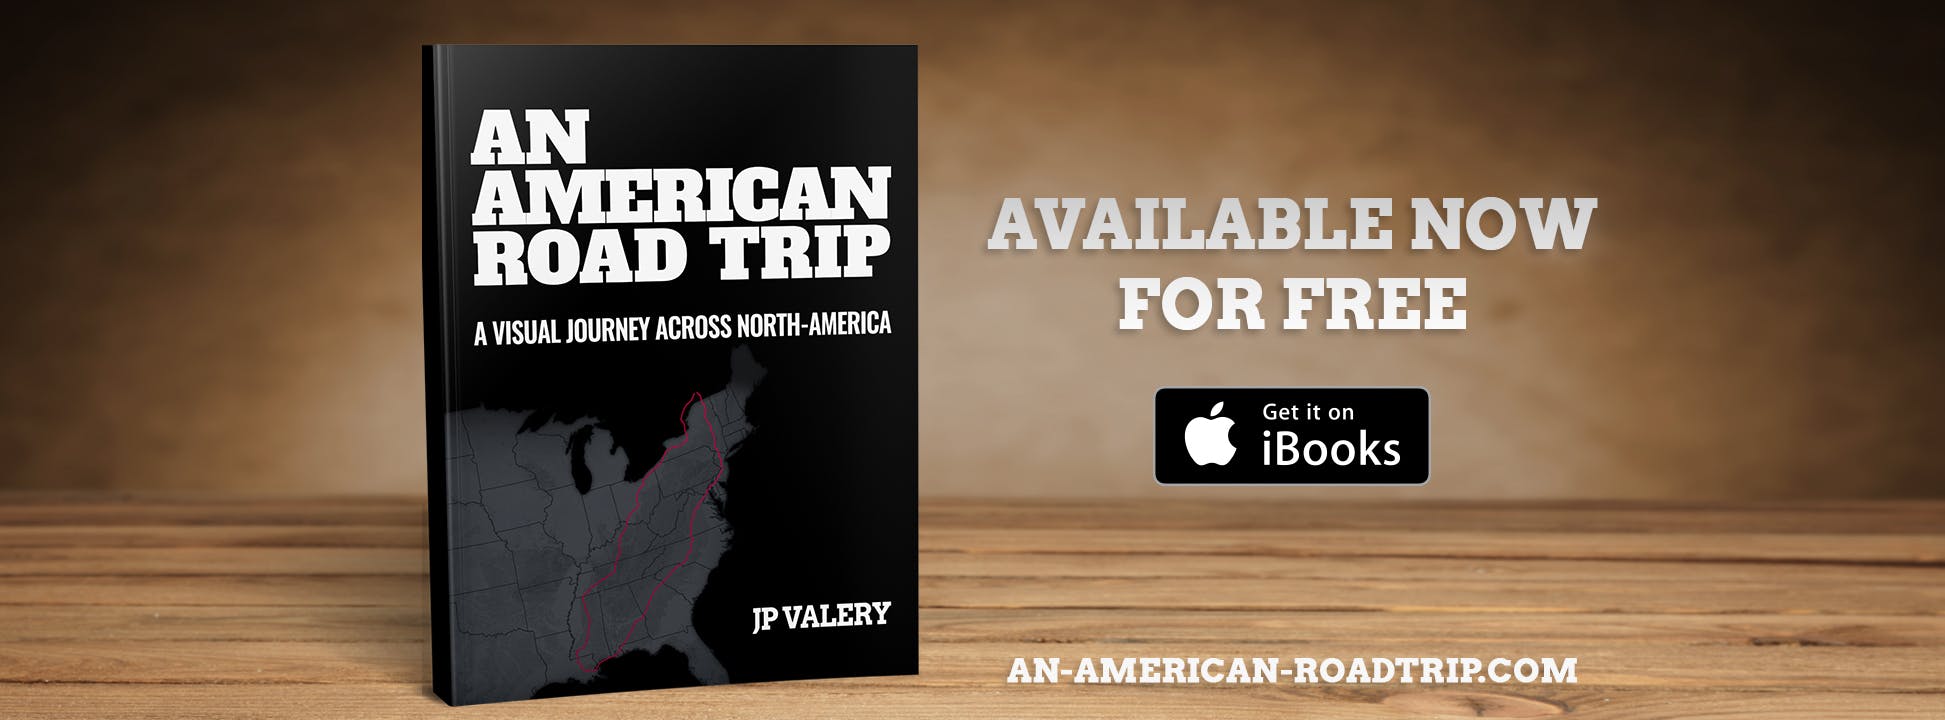 An American Road Trip media 1